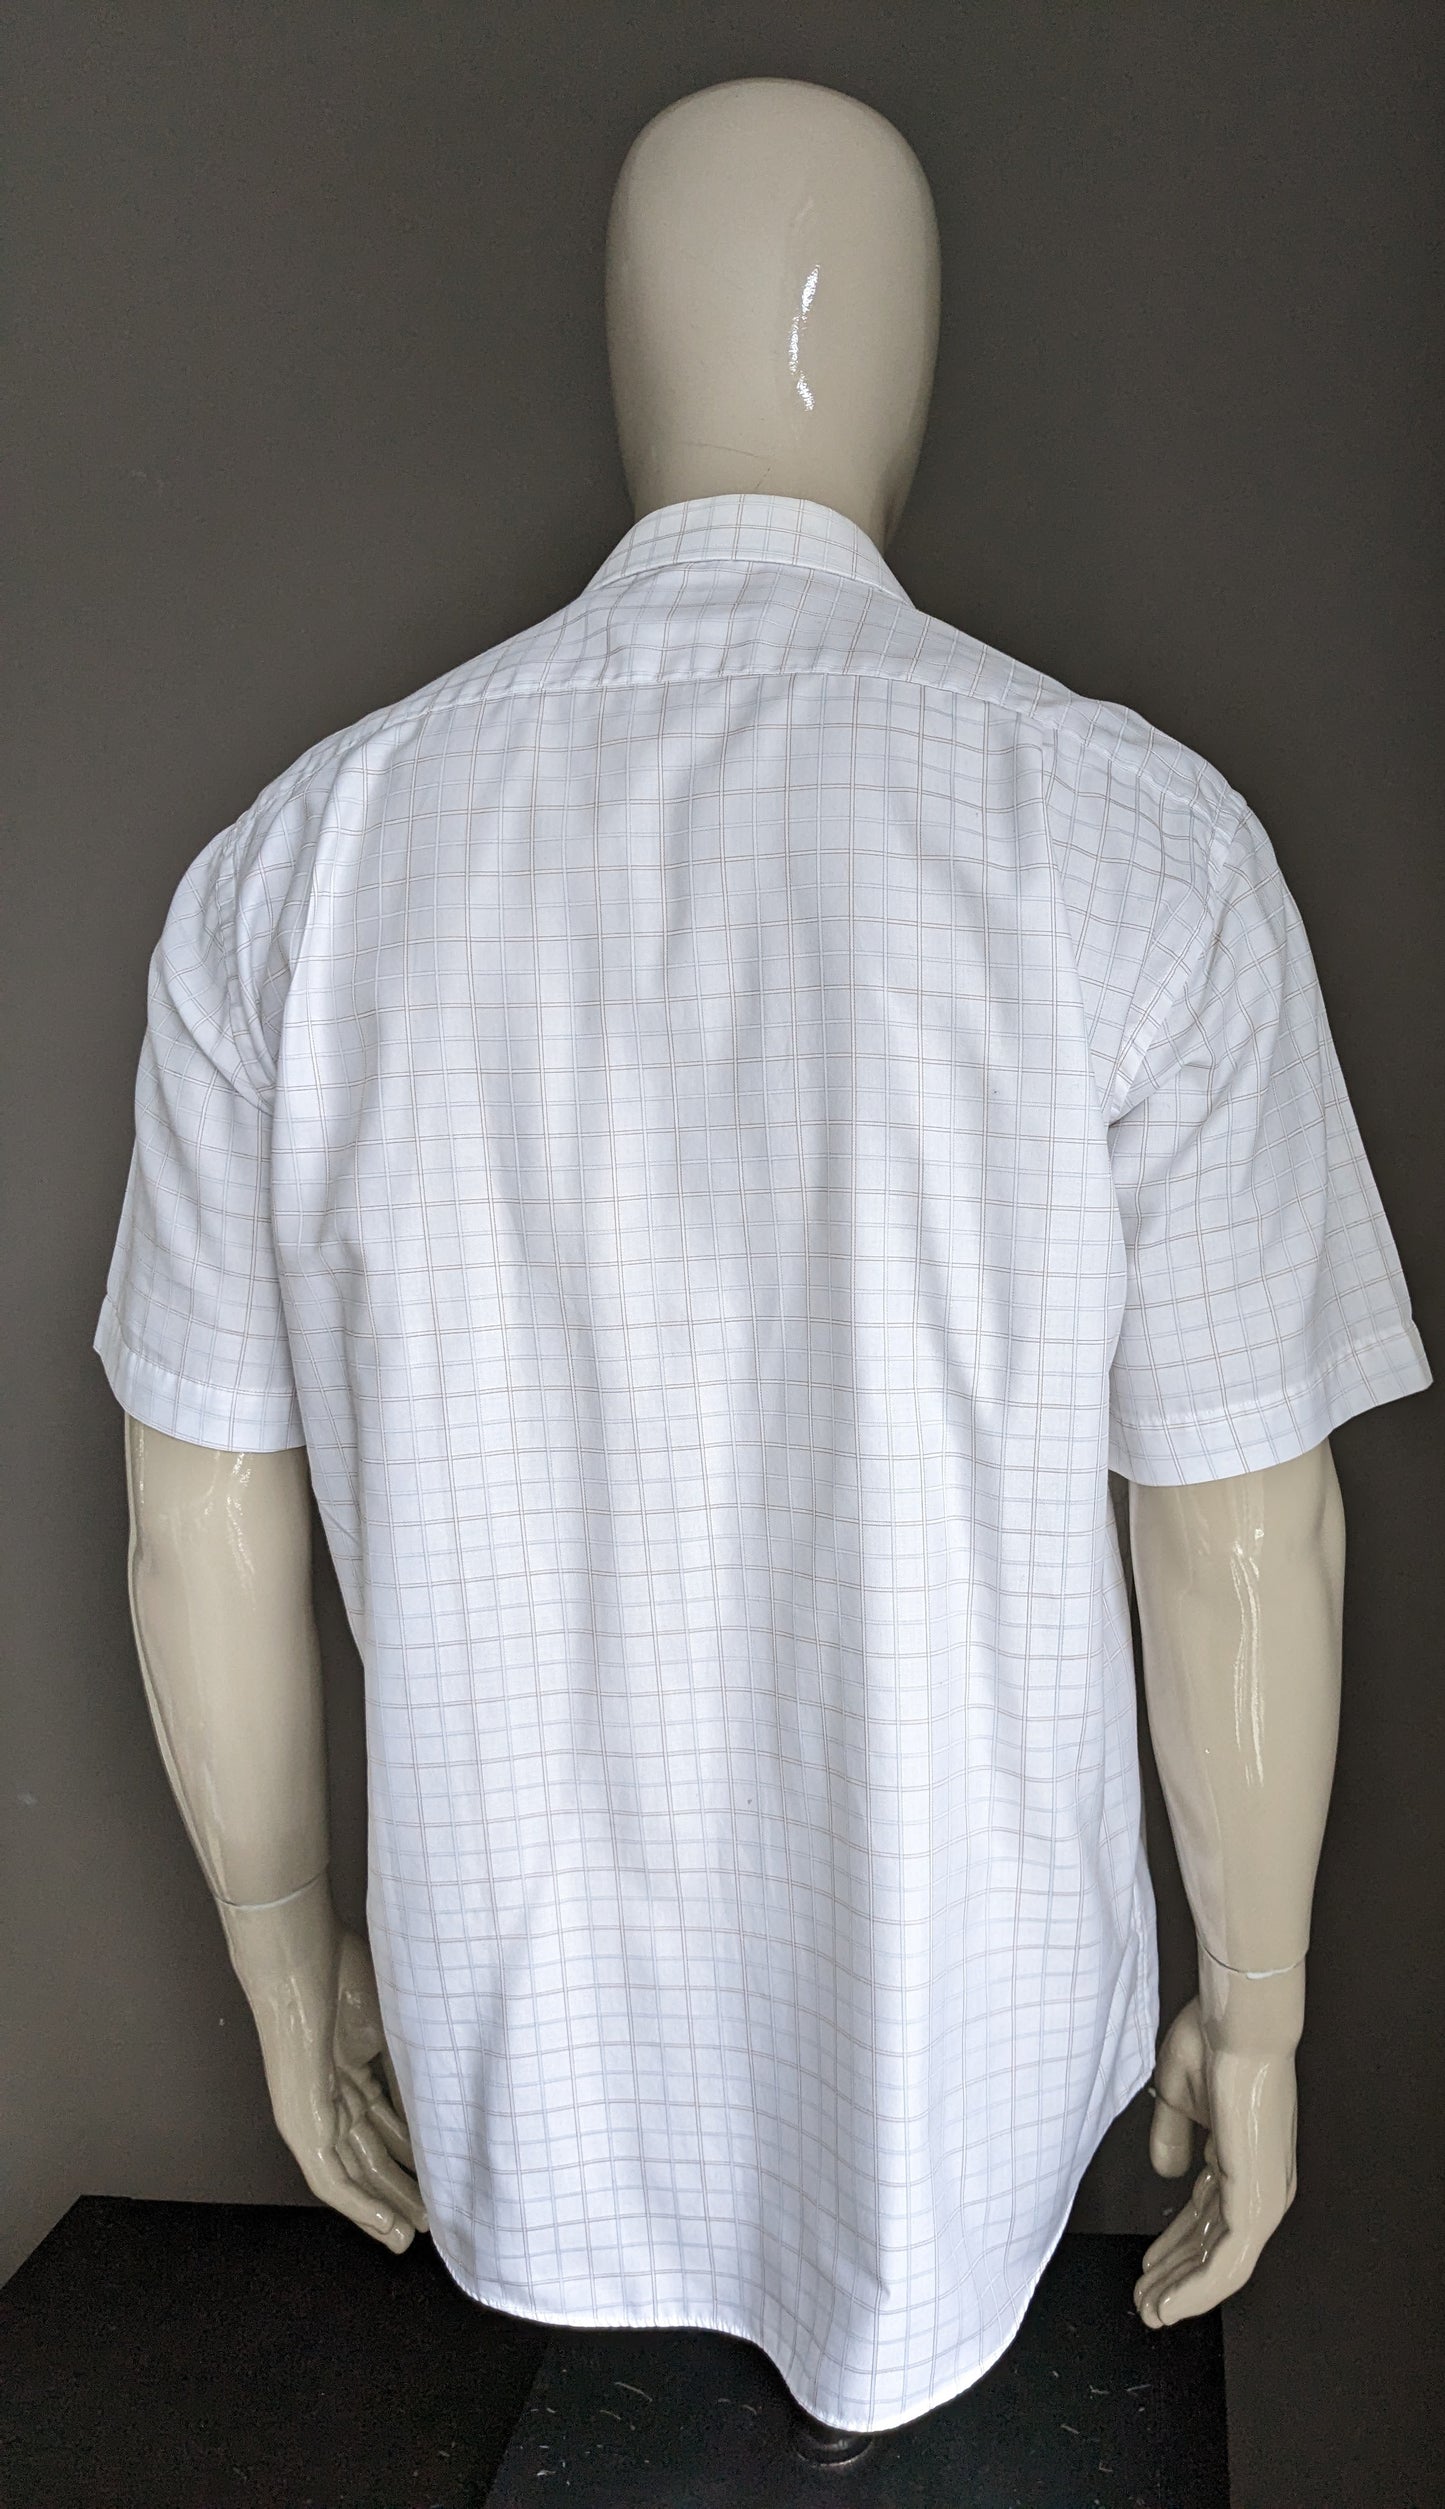 Marks & Spencer Shirt Shirt Shirt Sleeve. Ligne brune bleu blanc. Taille 42 / L.